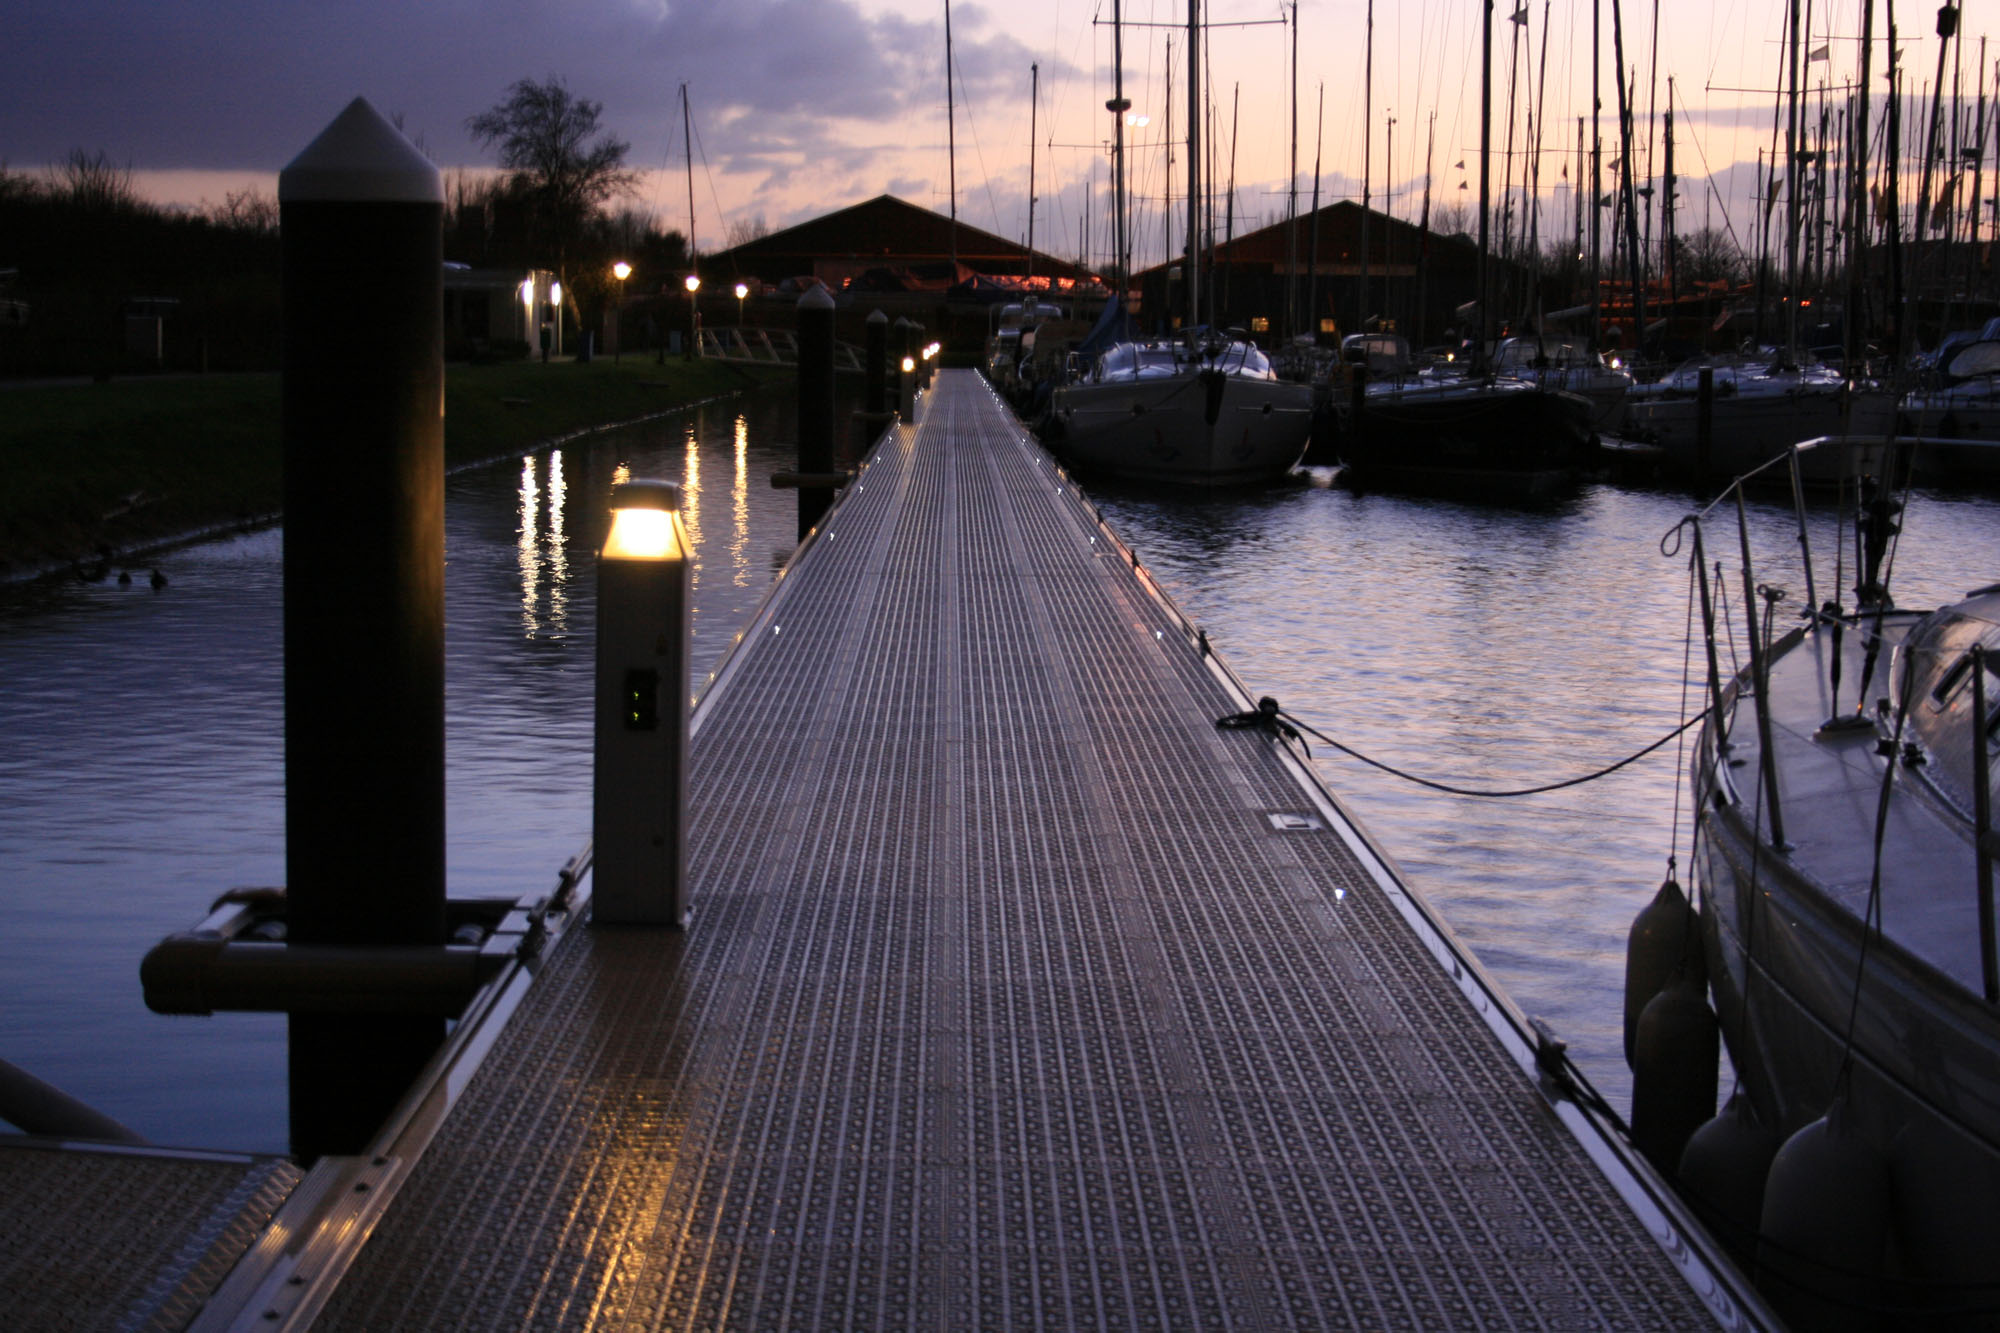 Newvisibility Poralu Solar LED marinas pontoon gangway 